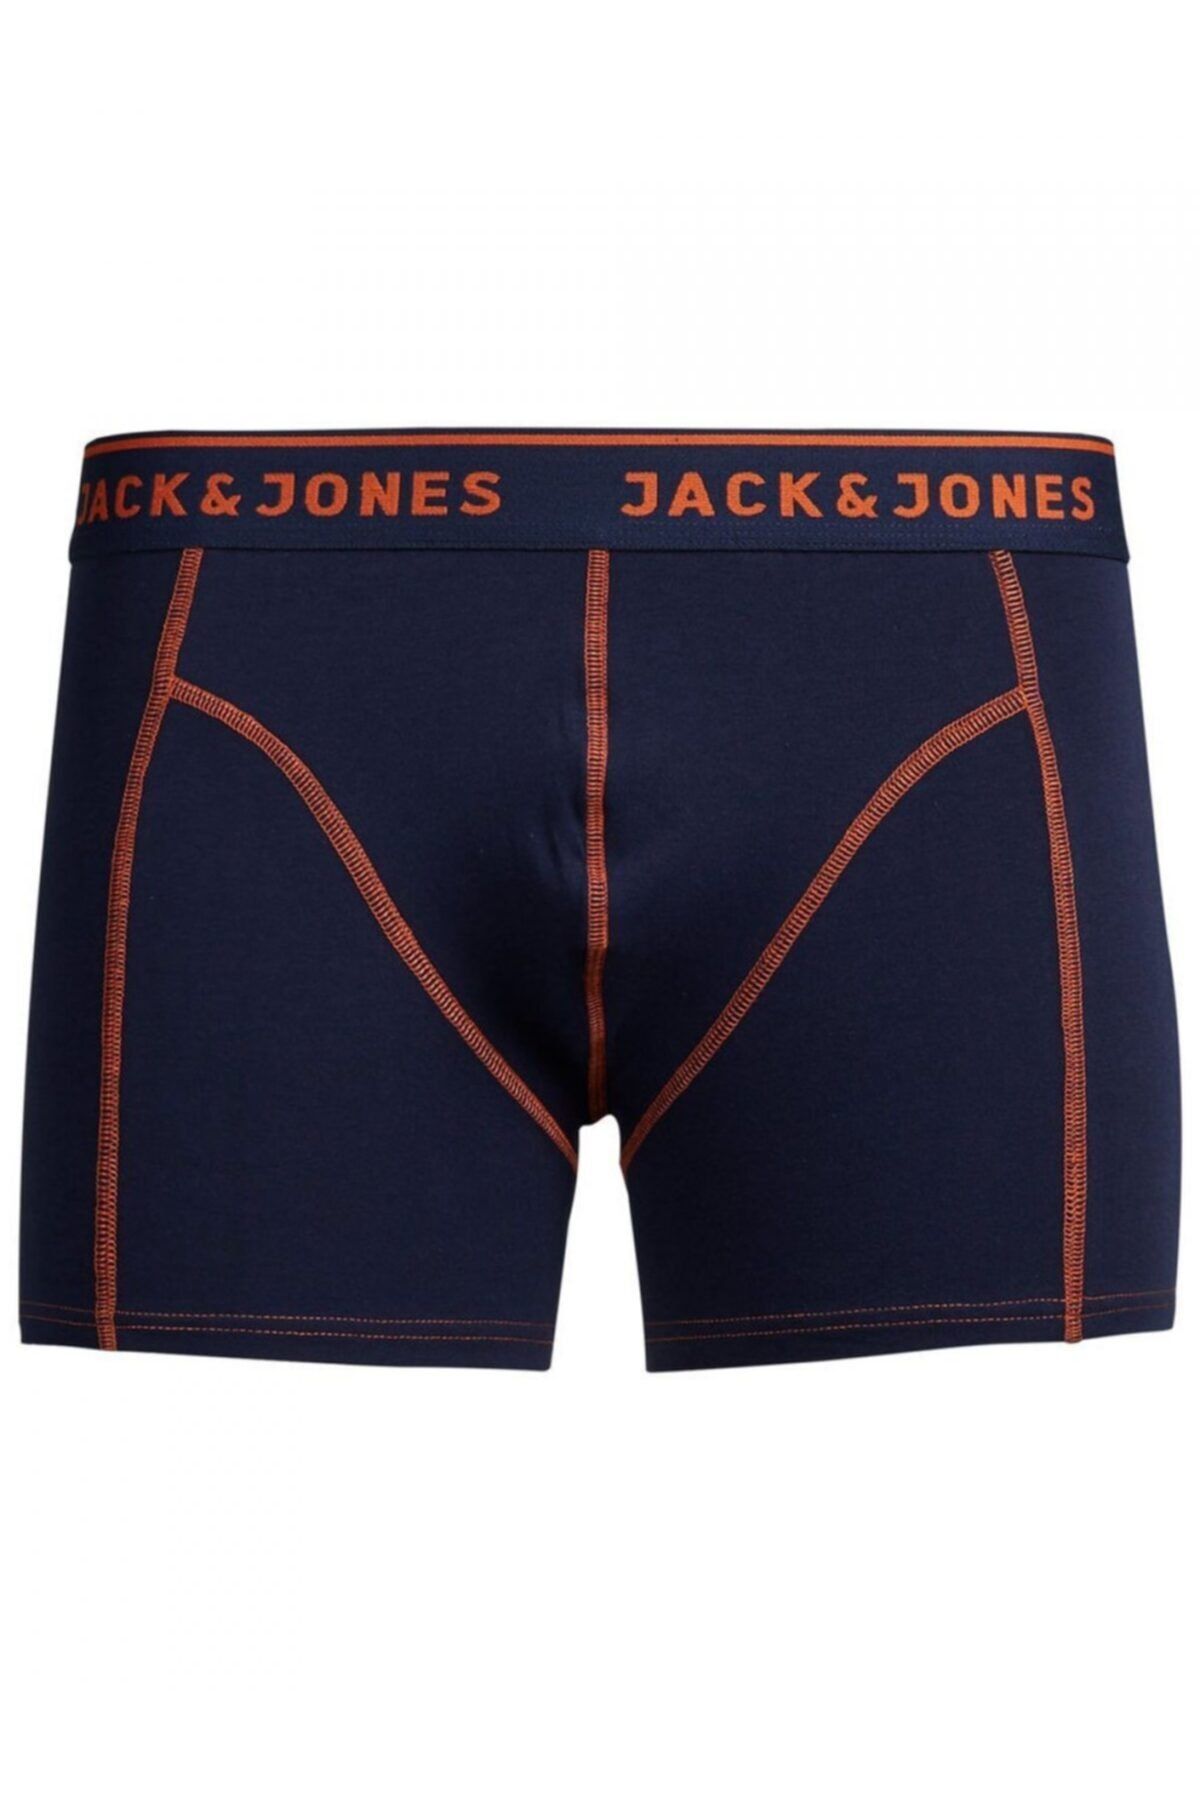 Jack & Jones Erkek Simple Boxer 12025953